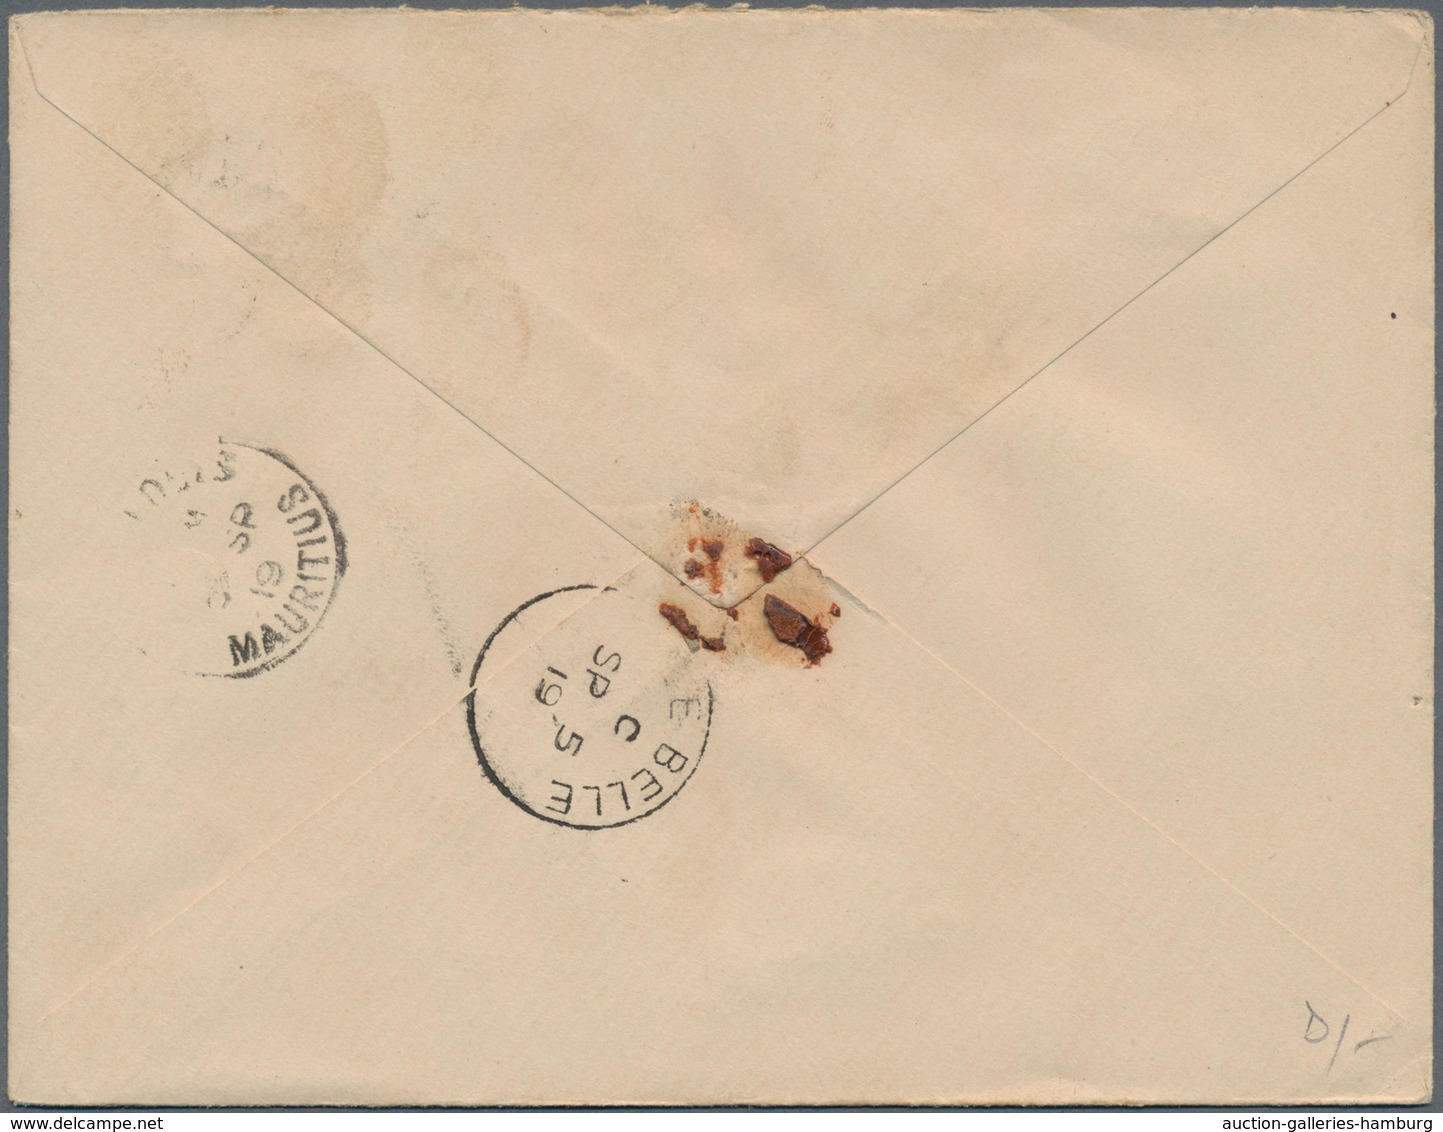 Mauritius: 1919. King George V 6c Carmine Envelope Cancelled Rose Belle C SP 5 19 Addressed To Merca - Mauricio (...-1967)